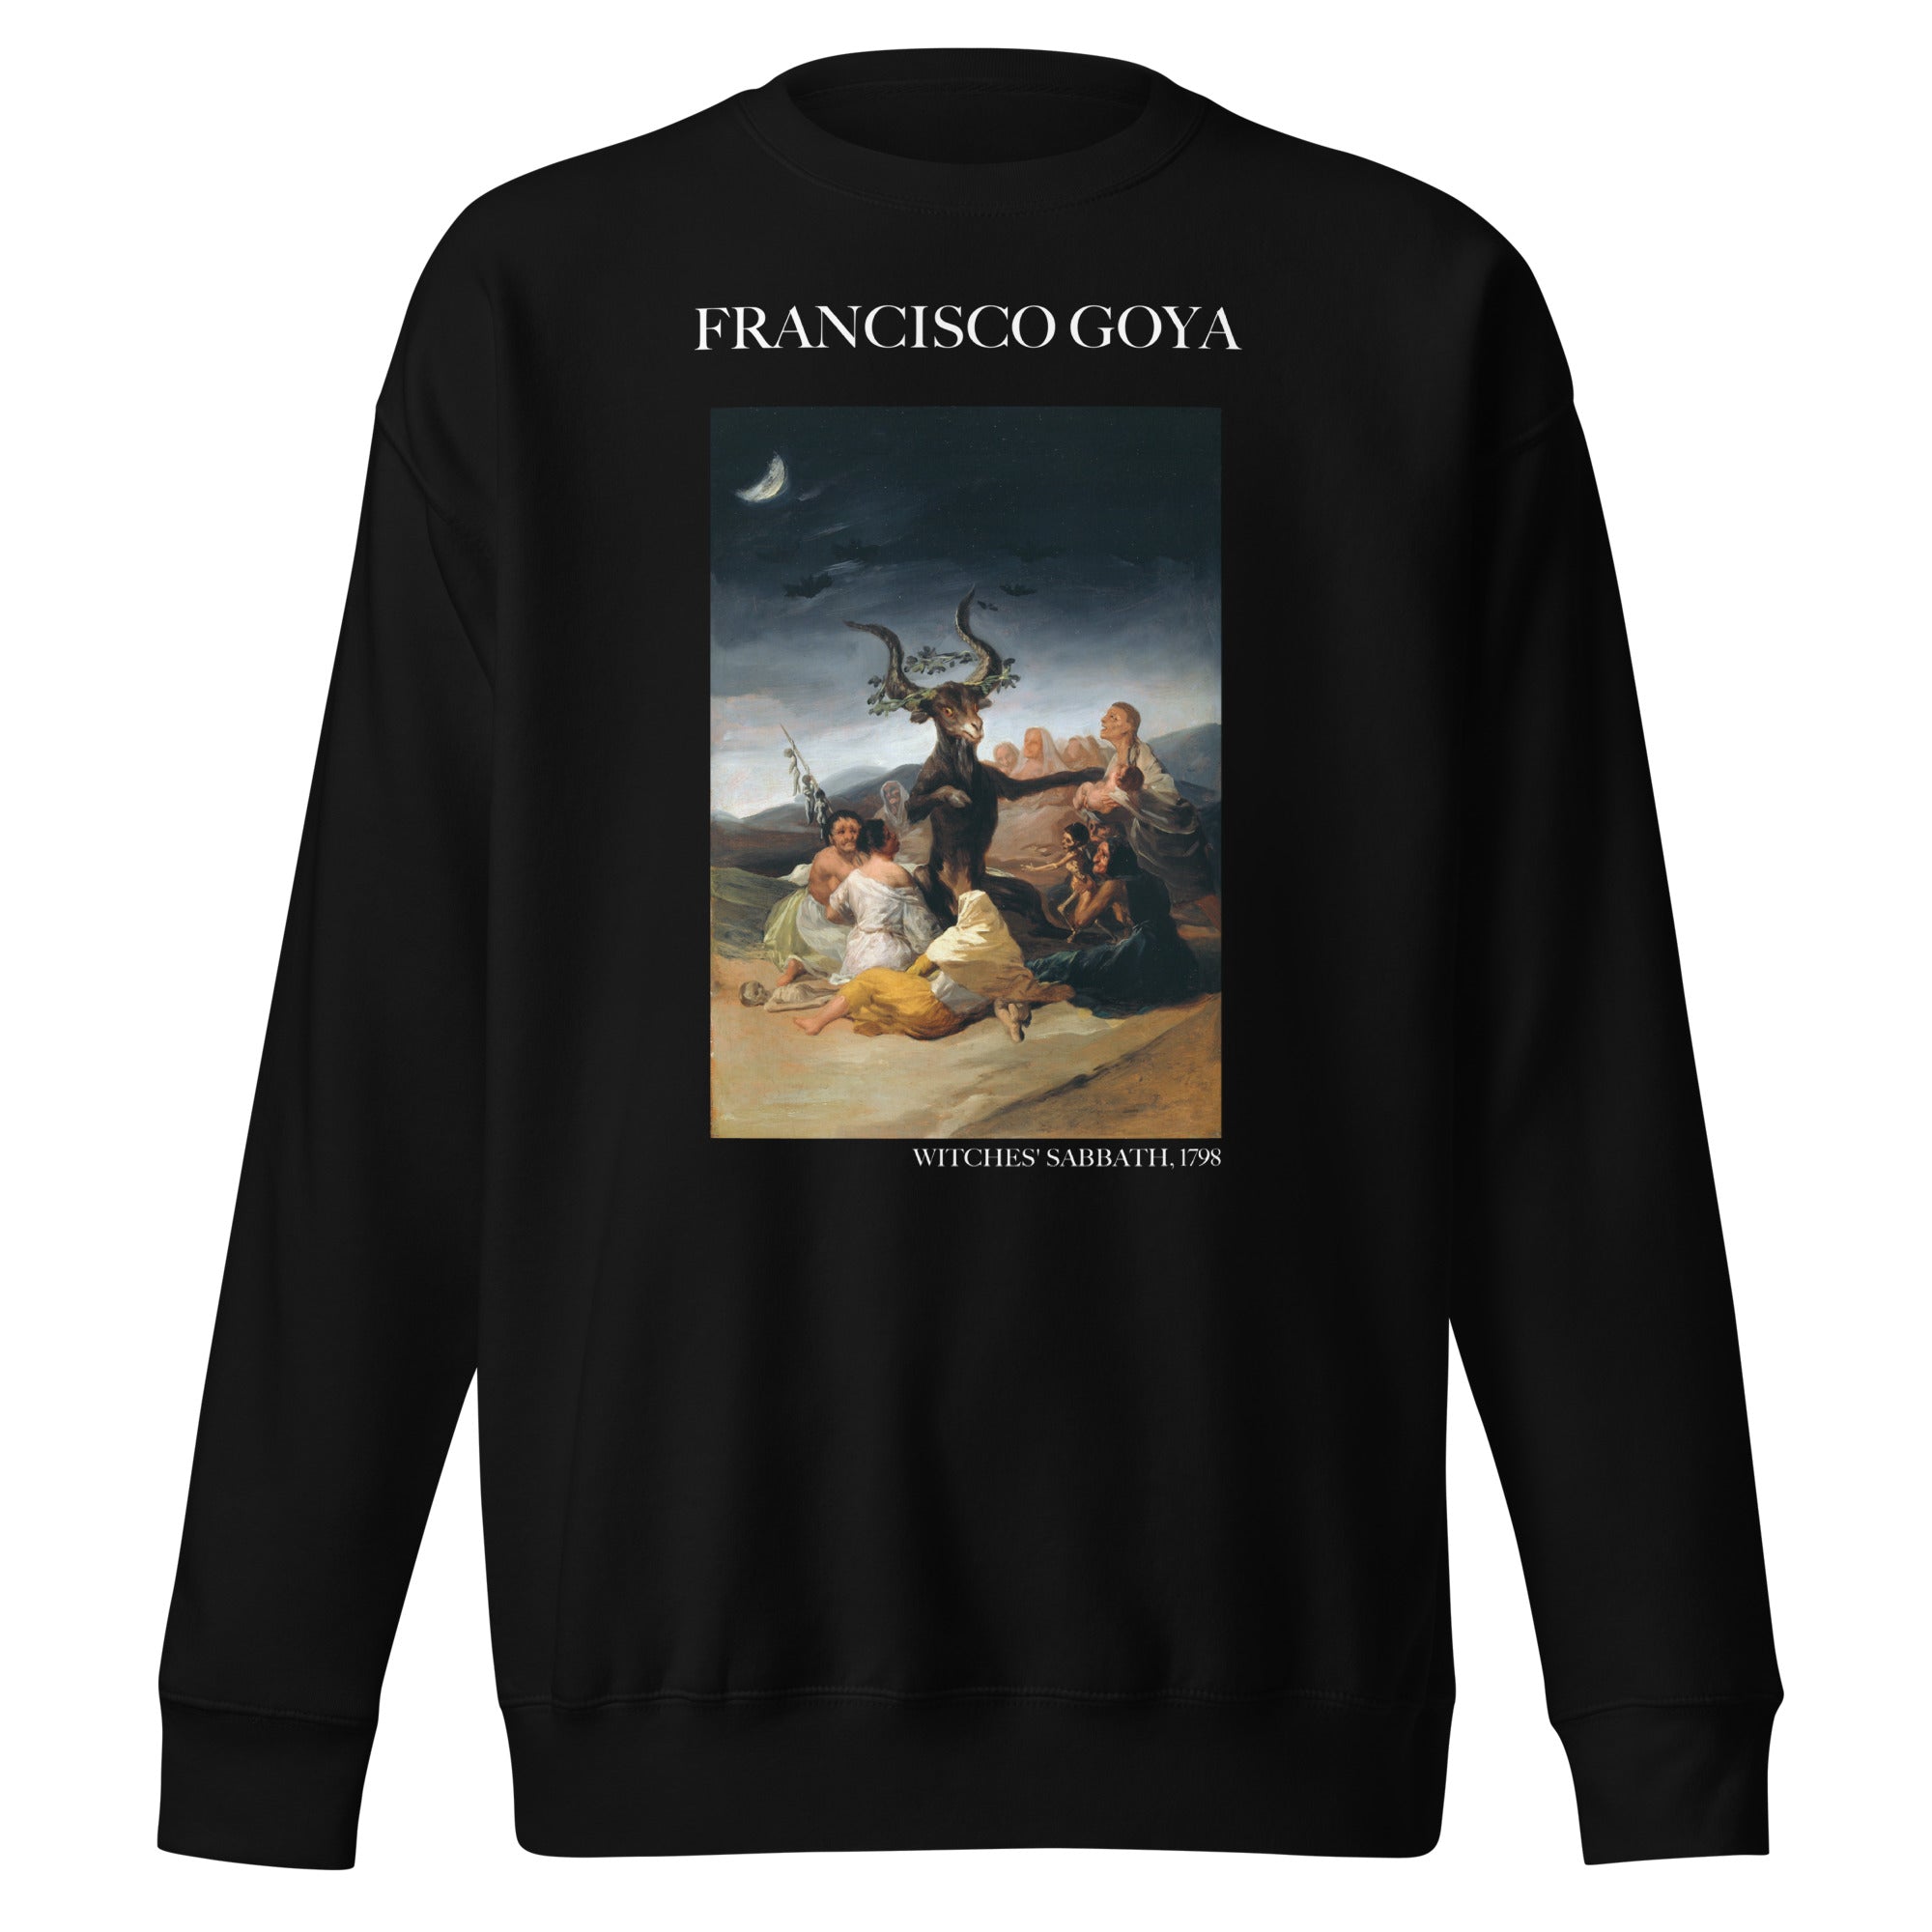 Francisco Goya 'Hexensabbat' Berühmtes Gemälde Sweatshirt | Unisex Premium Sweatshirt